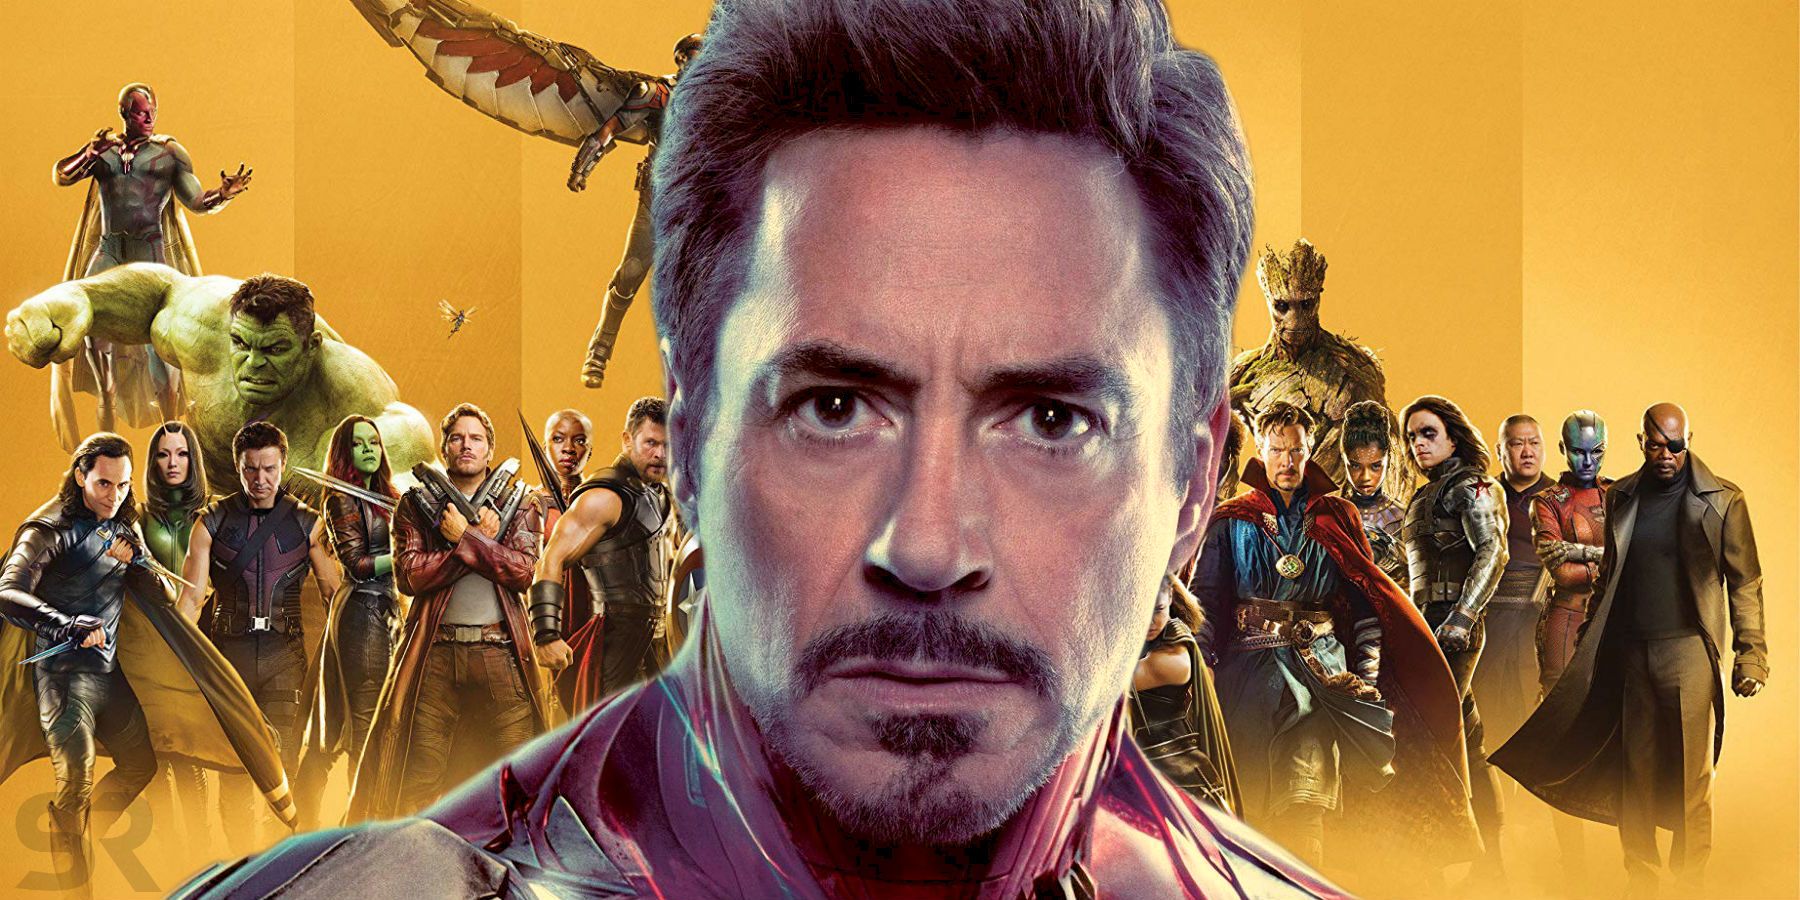 Tony Stark Memorial Day; what did Robert Downey Jr. do next as